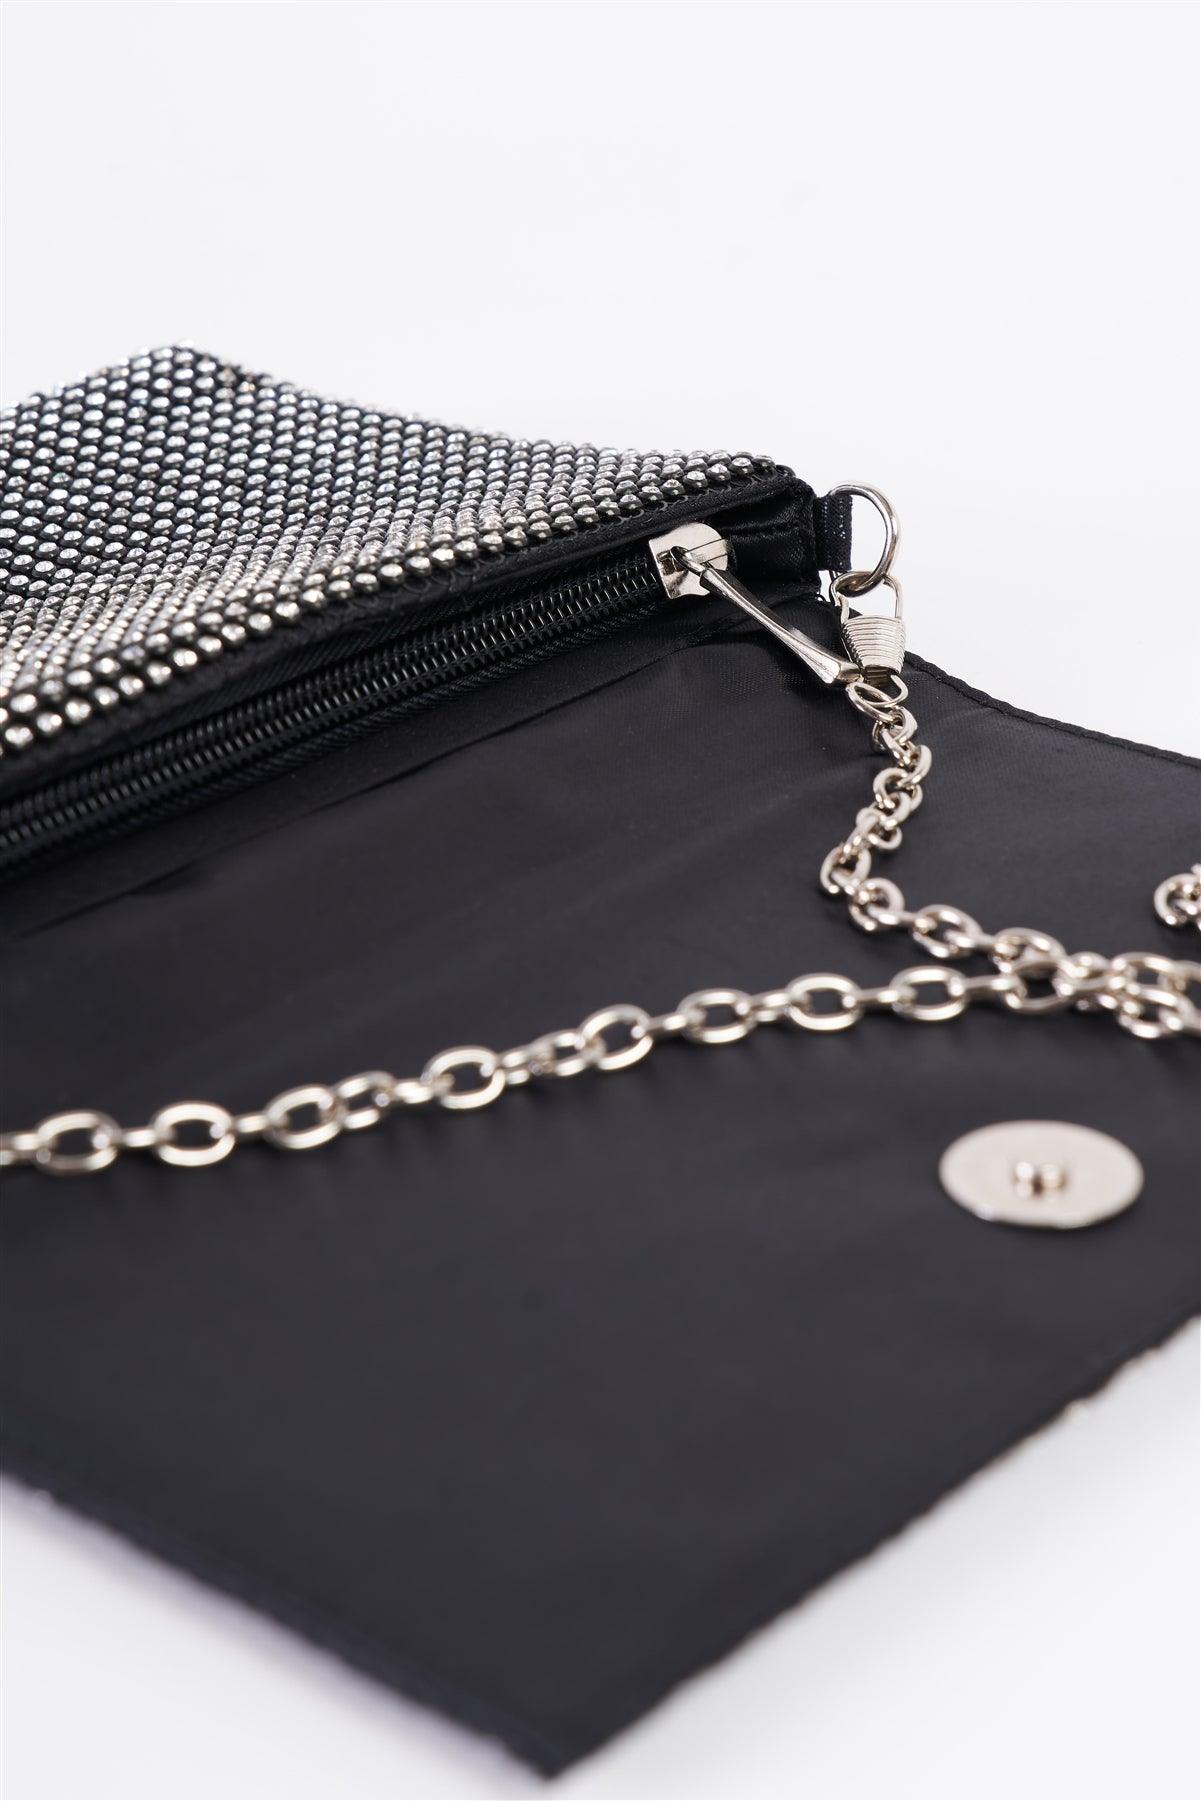 Black Rectangle Rhinestone Chain Crossbody Strap Clutch Bag /1 Bag